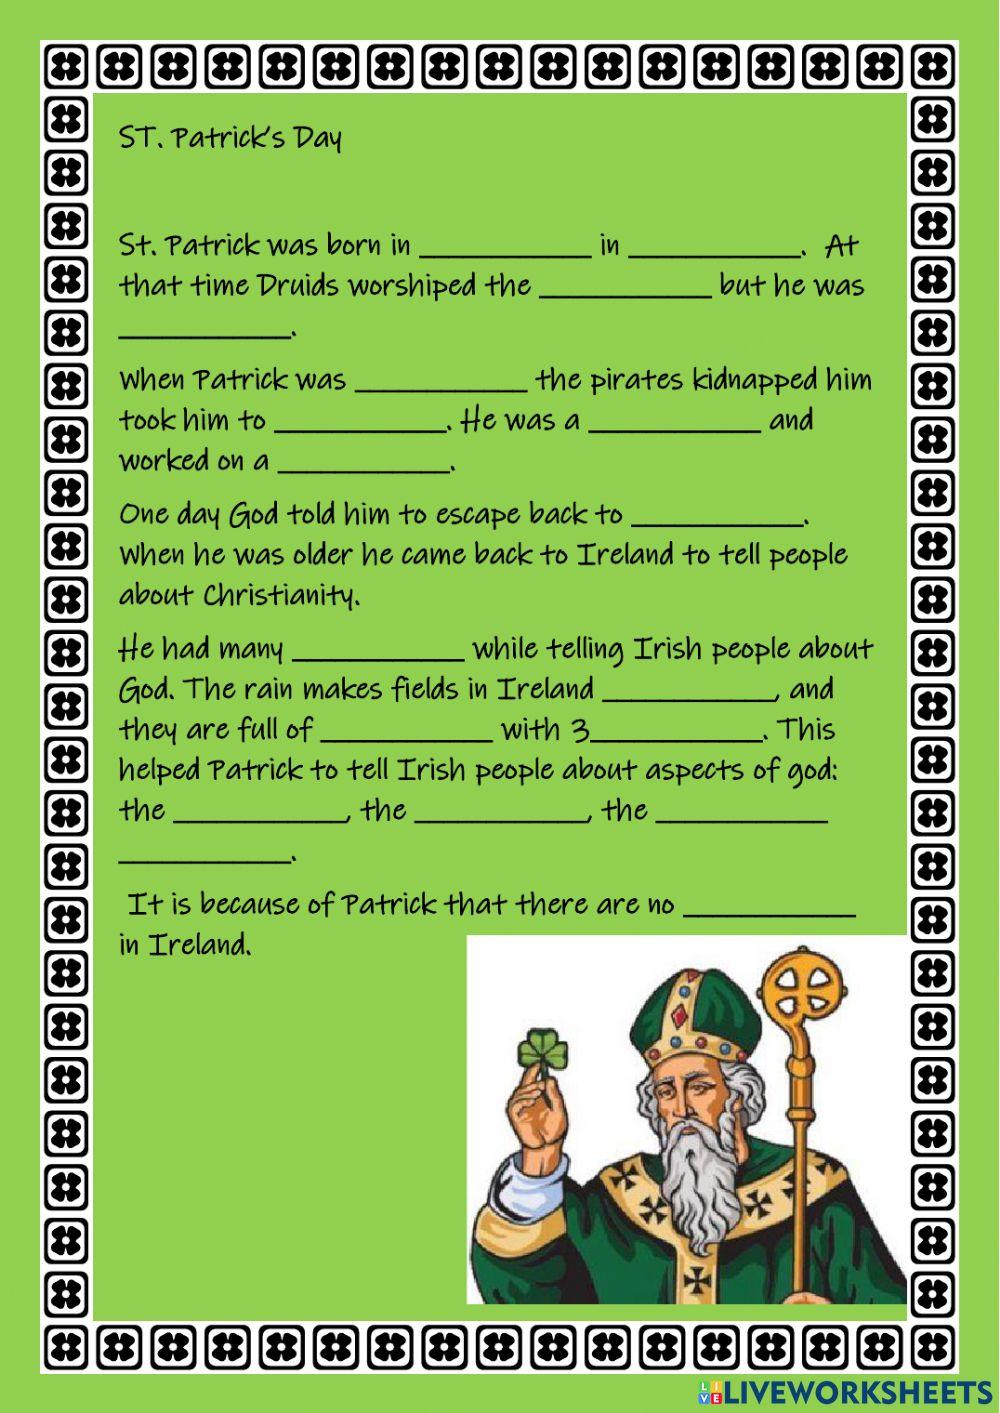 Saint Patrick's Day Animated History  Fiveminded youtube